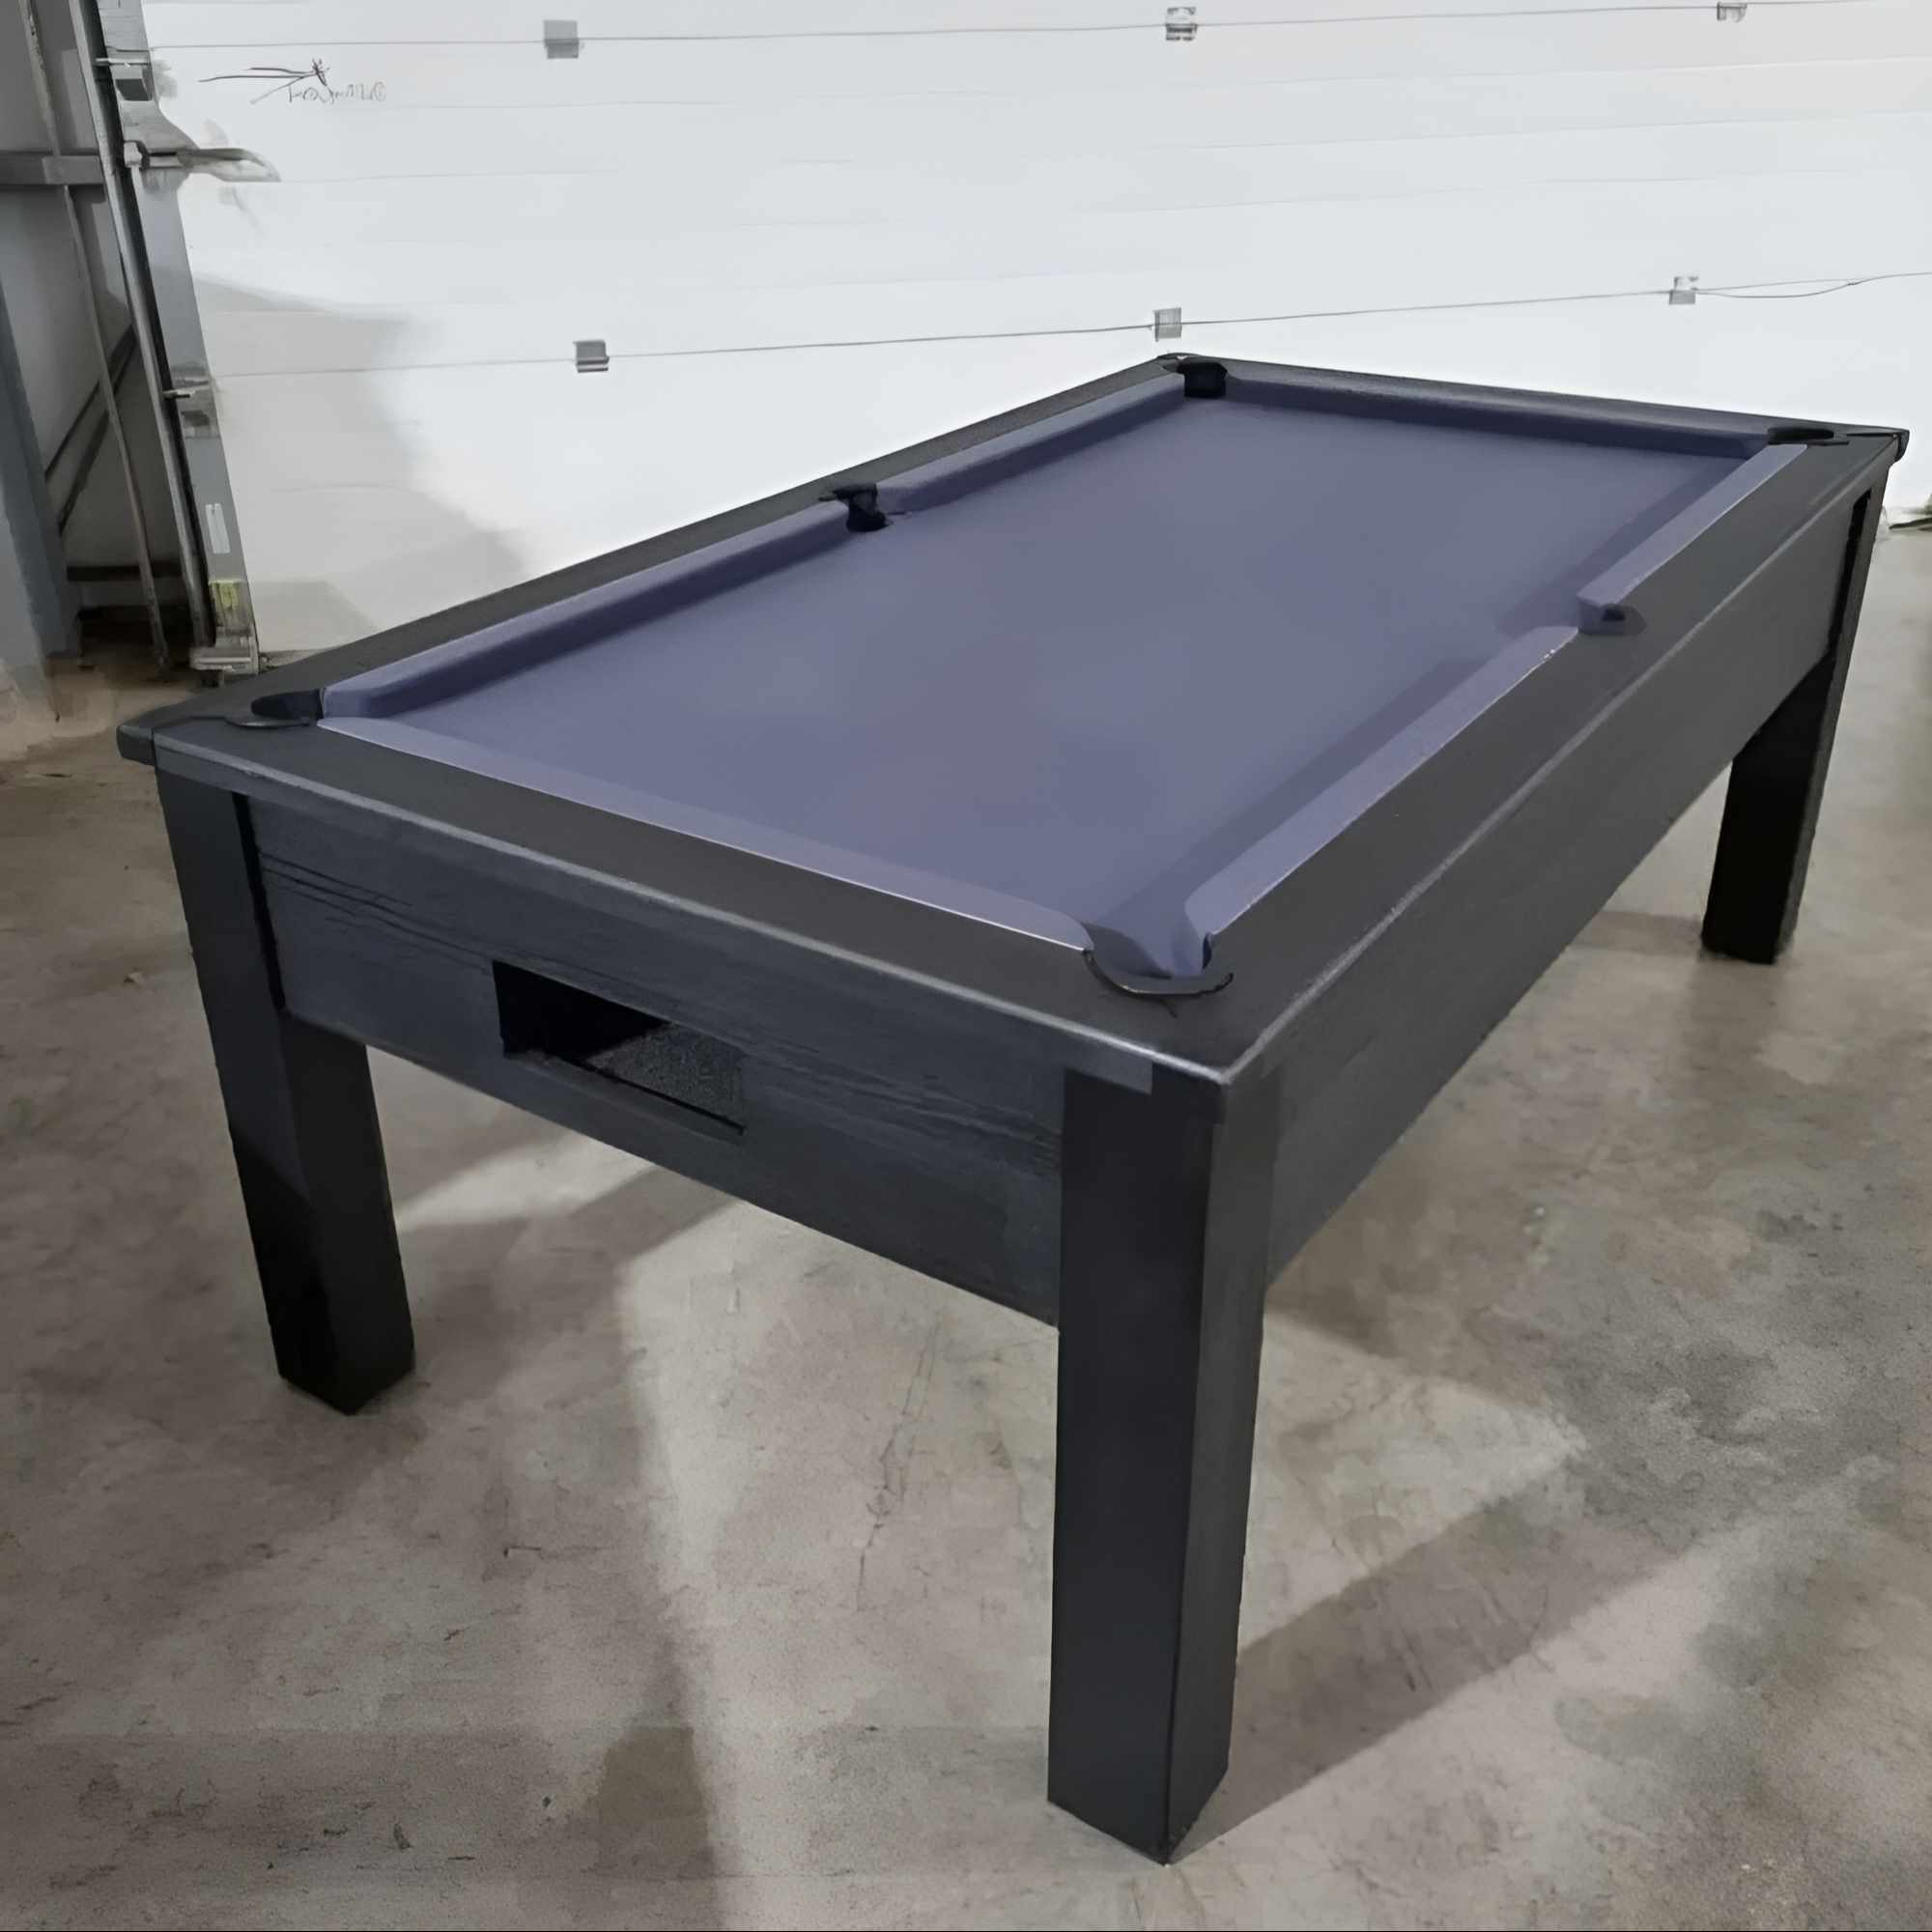 FMF Spirit Tournament Black Stealth Slate Bed Pool Table